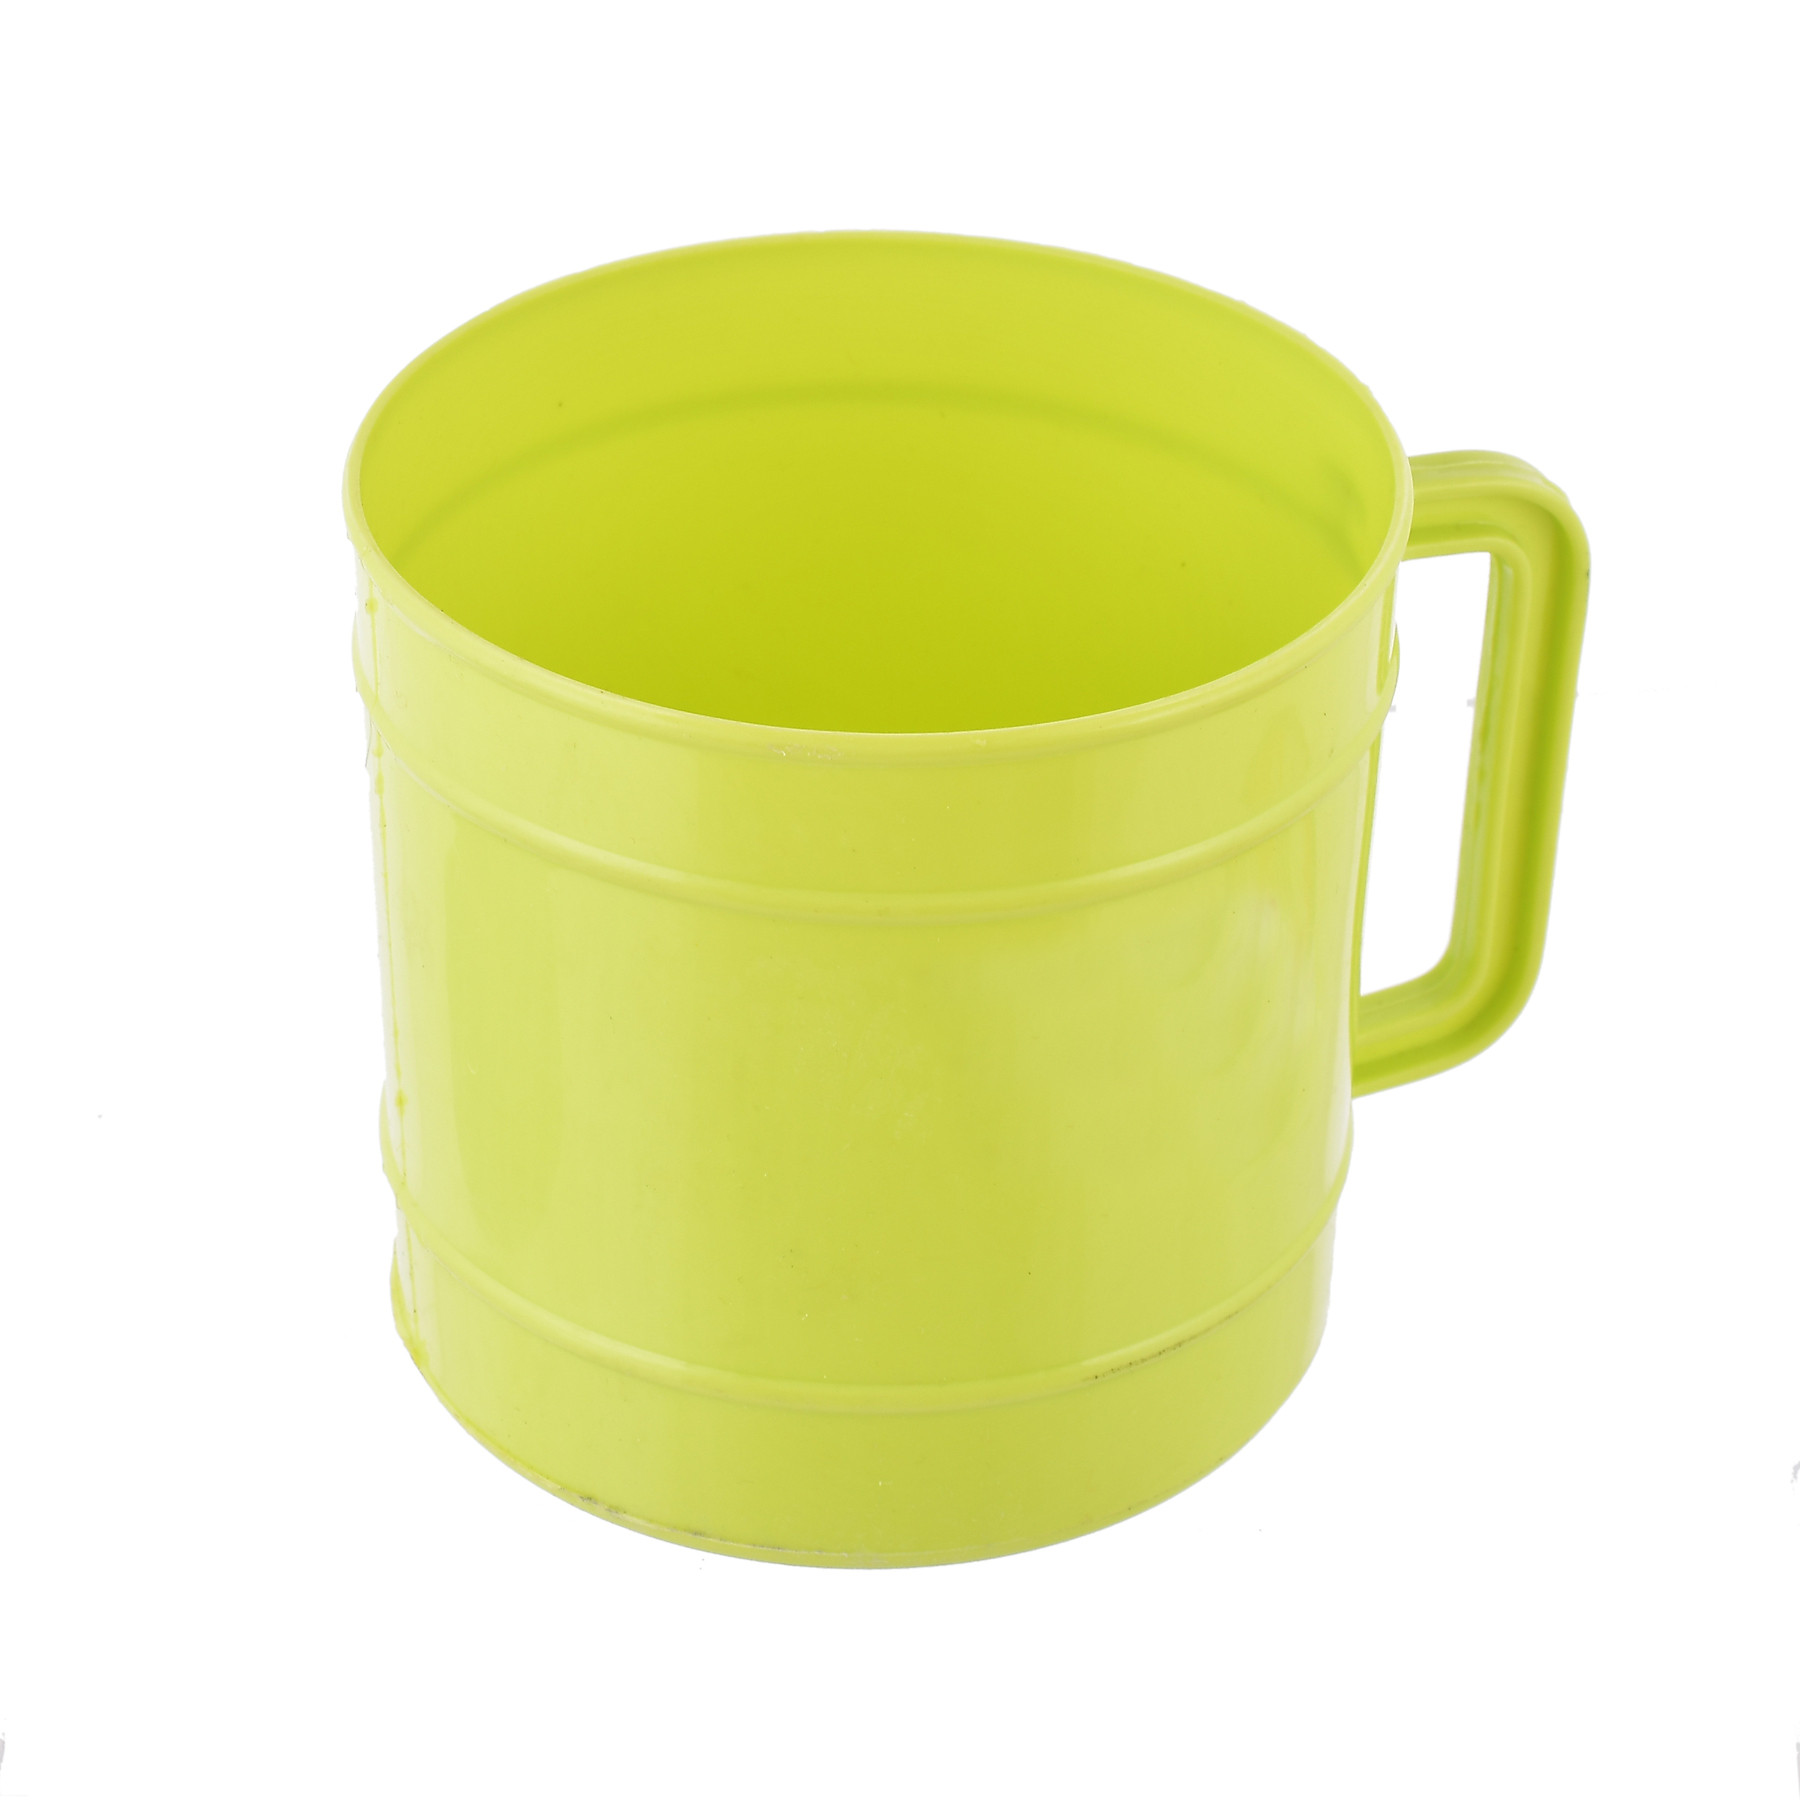 Kuber Industries Plastic Bathroom Mug, 1 Ltr., Pack of 6 (Green & Cream & Pink)